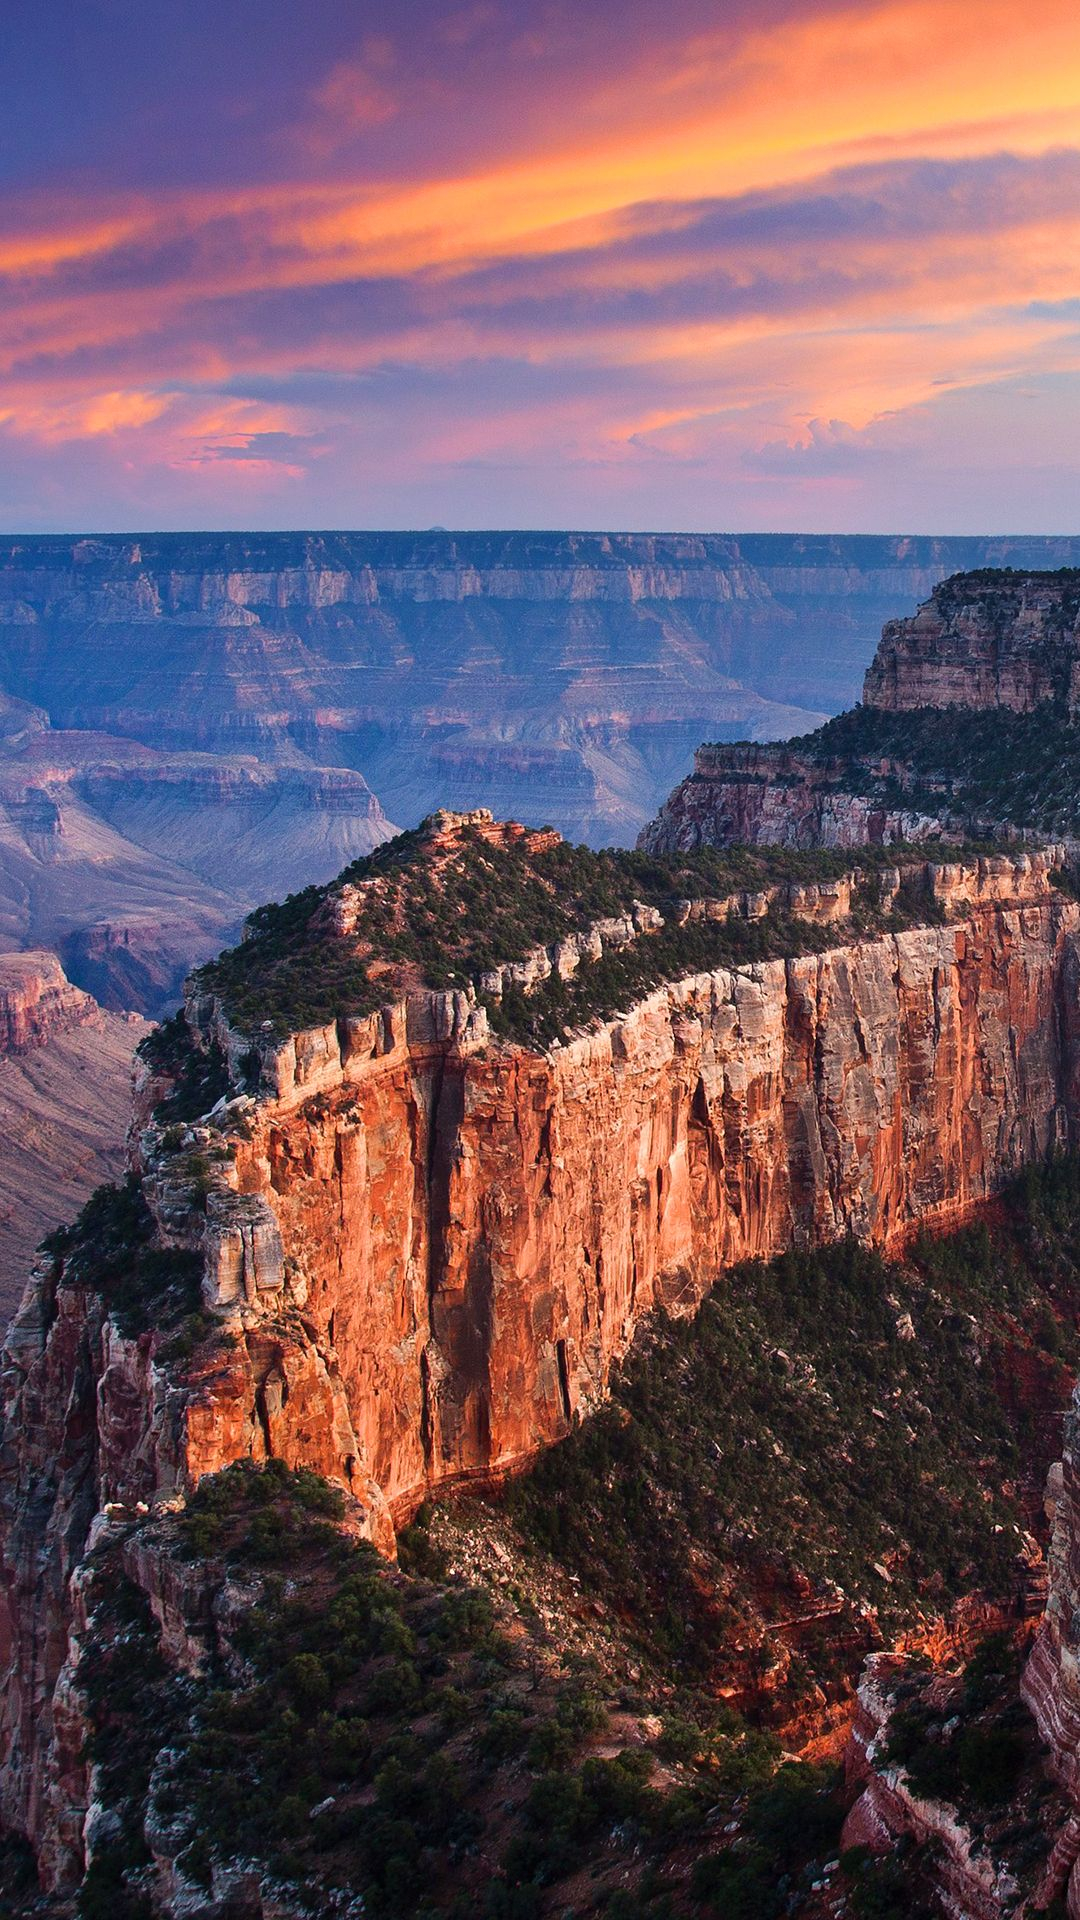 1080x1920 Grand Canyon Arizona USA | 4K wallpapers, free and easy to download | Grand canyon wallpaper, National parks, Grand canyon arizona